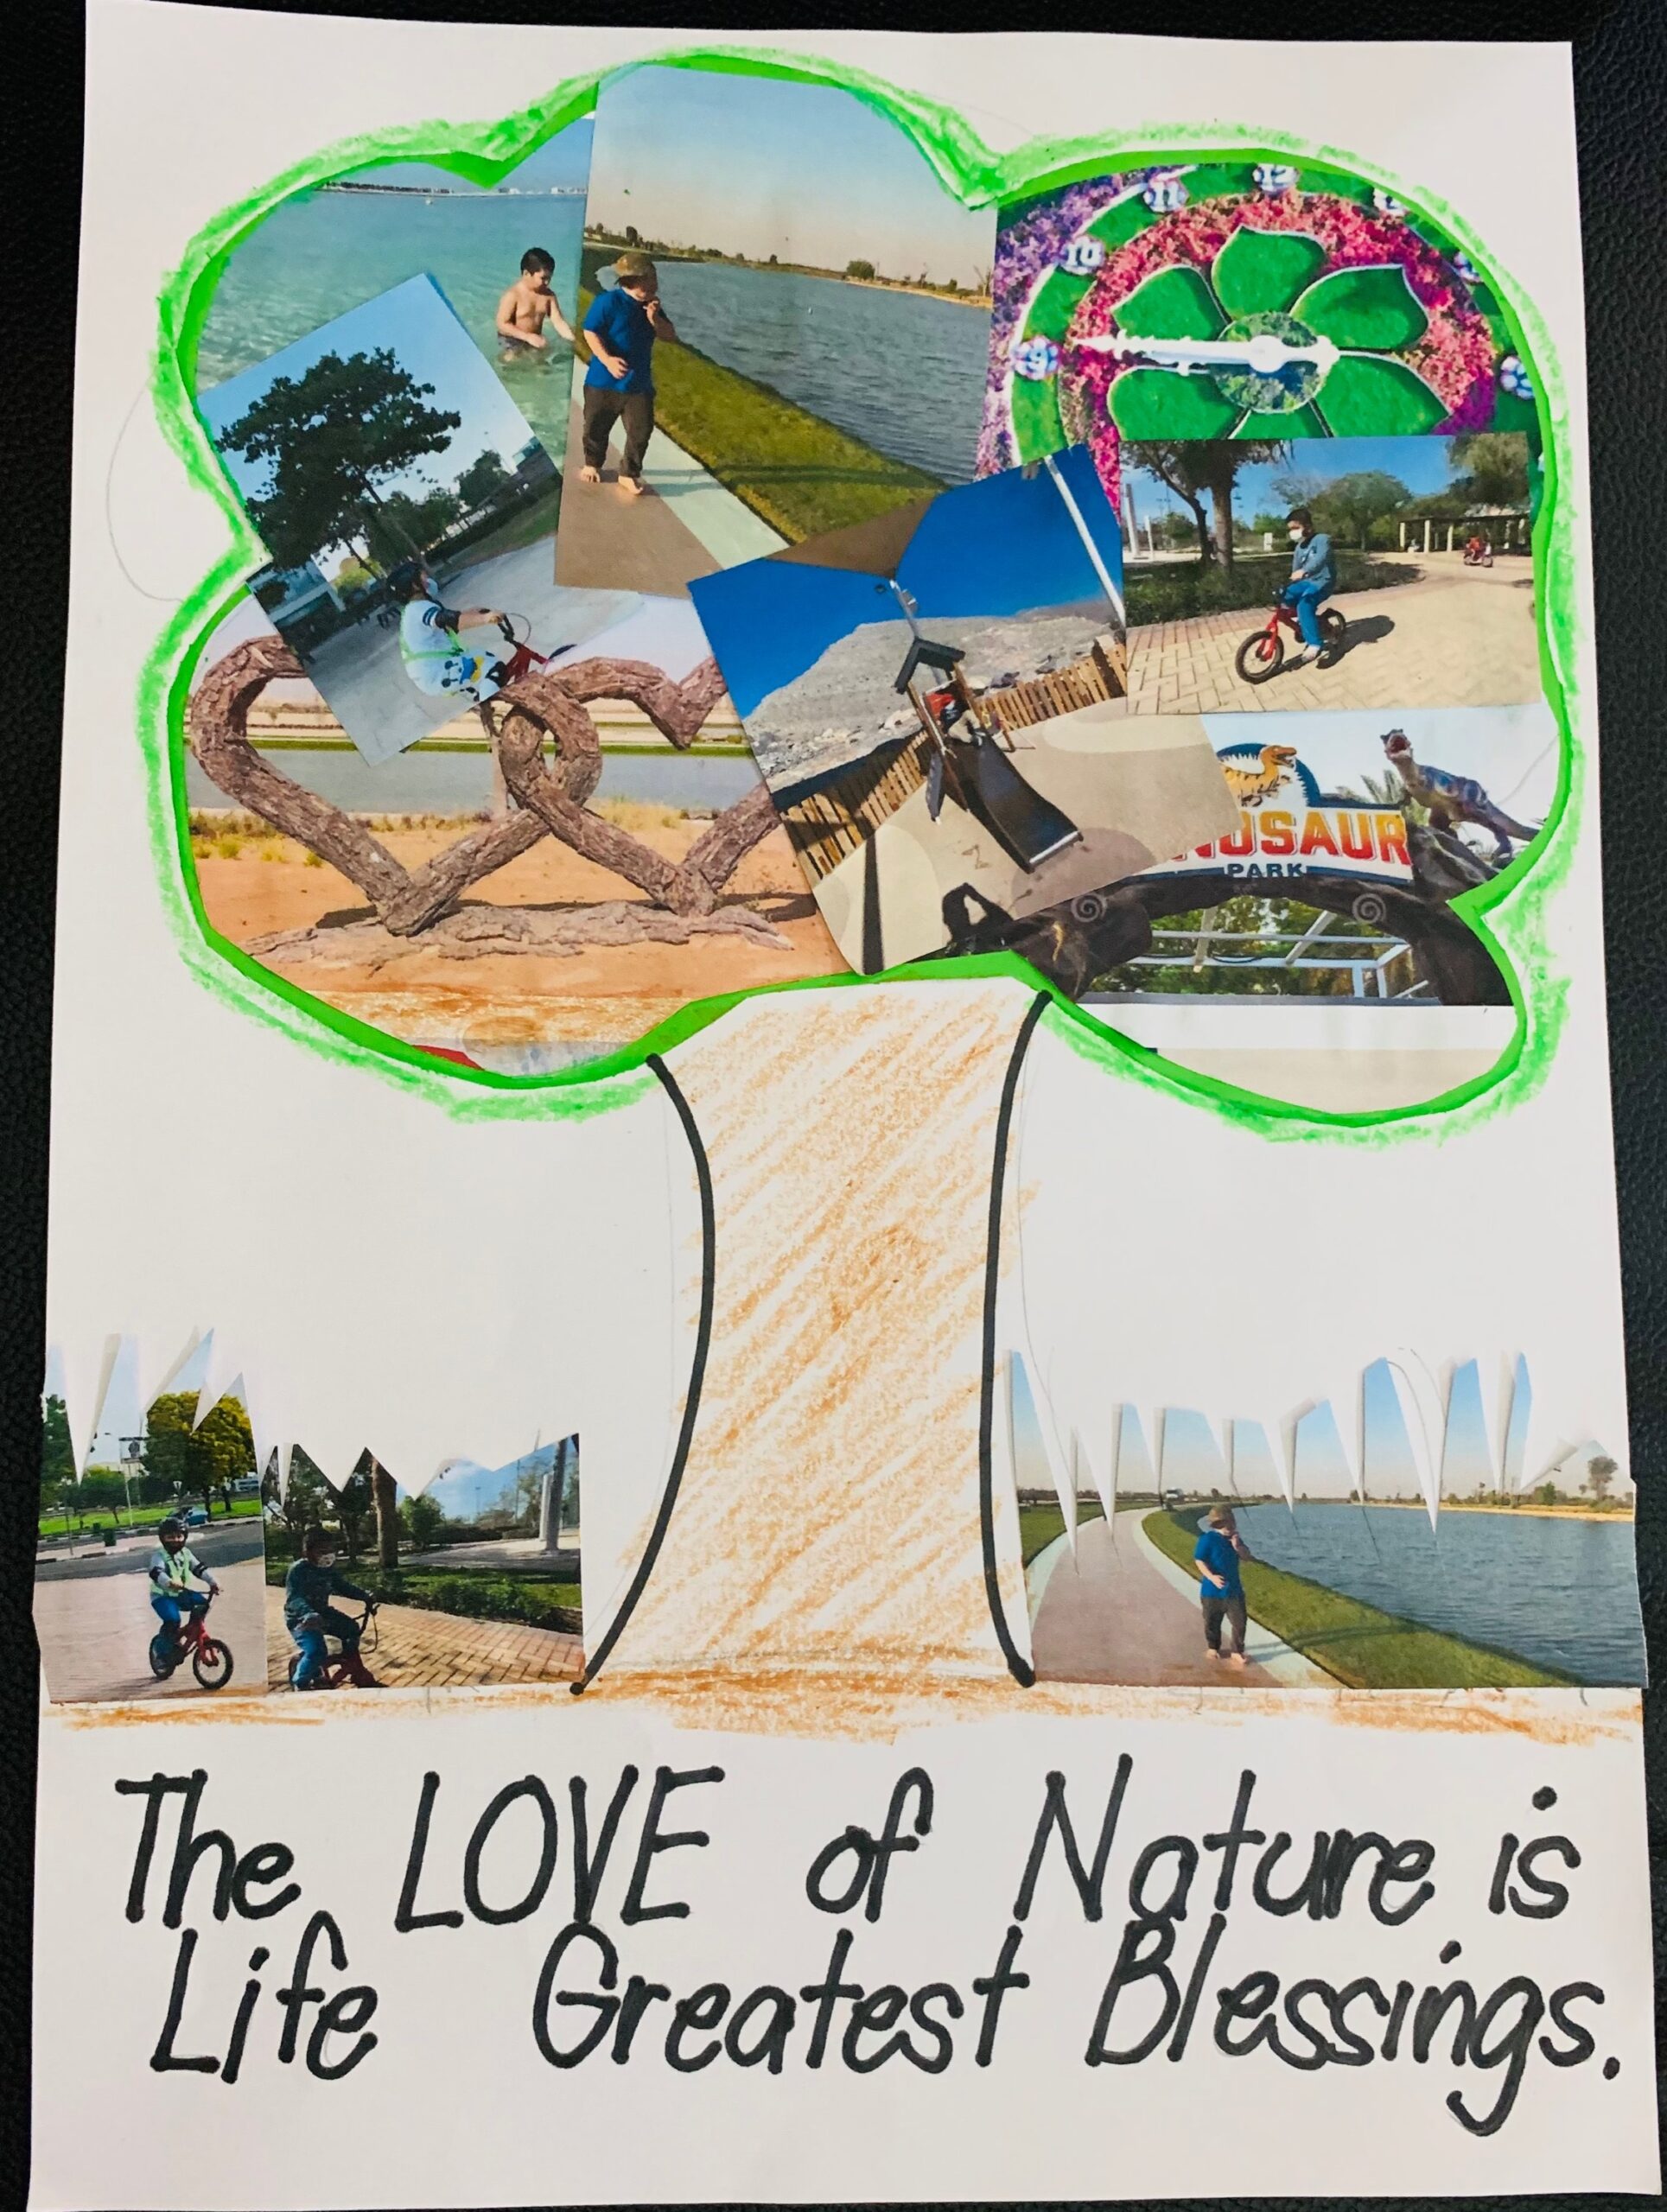 The Love of Nature by Matt Gabriel Comia